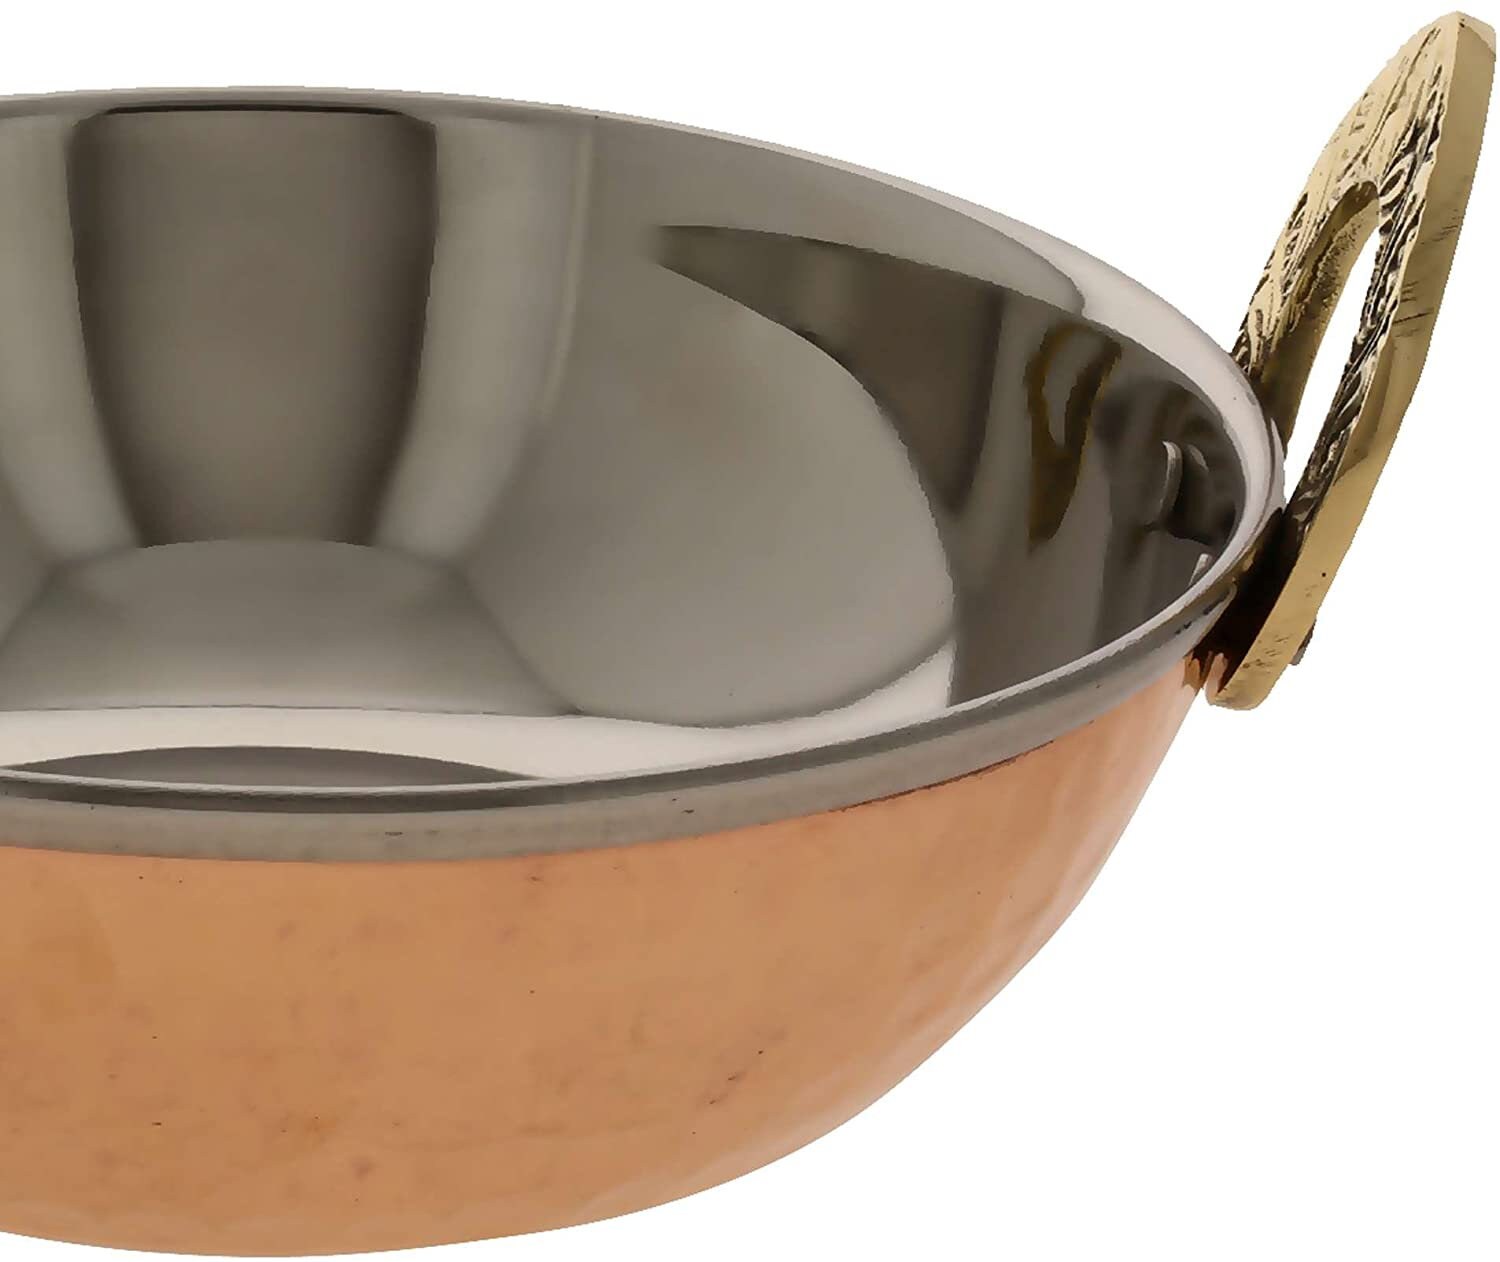 Karahi Serving Bowl - Pure Copper & Stainless Steel 48 oz (8 Diameter)